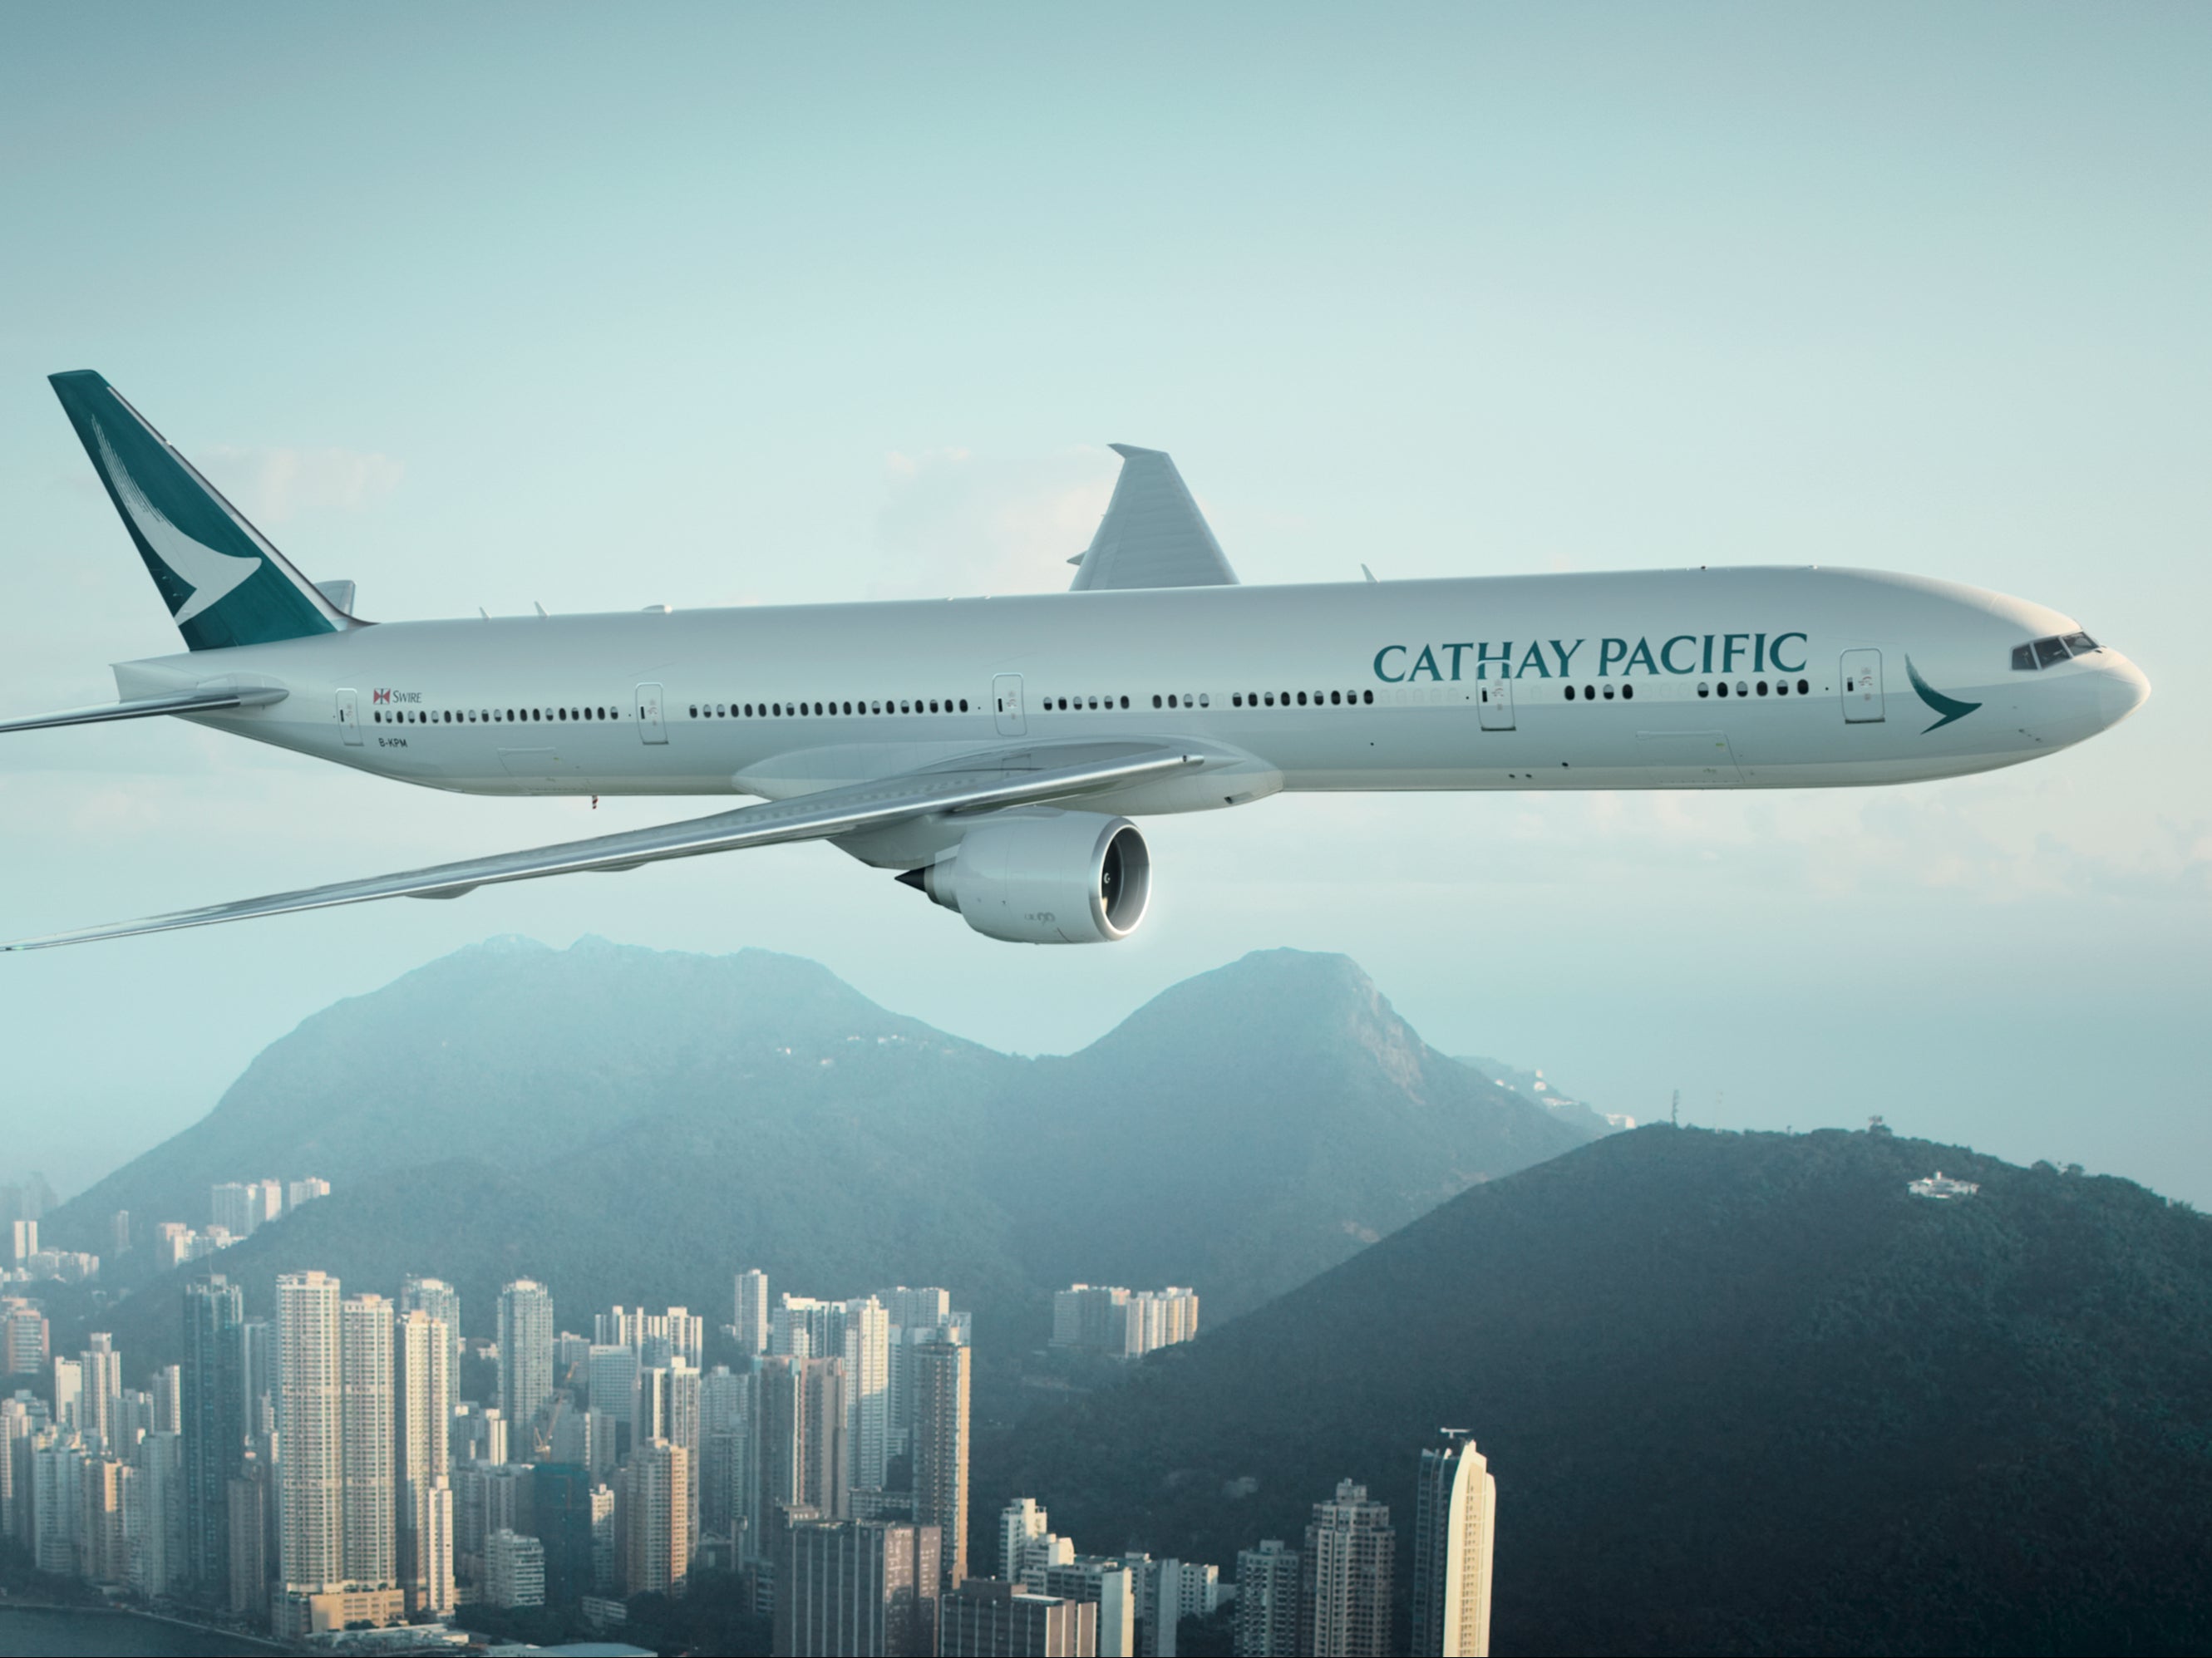 Cathay Pacific Boeing 777 above Hong Kong